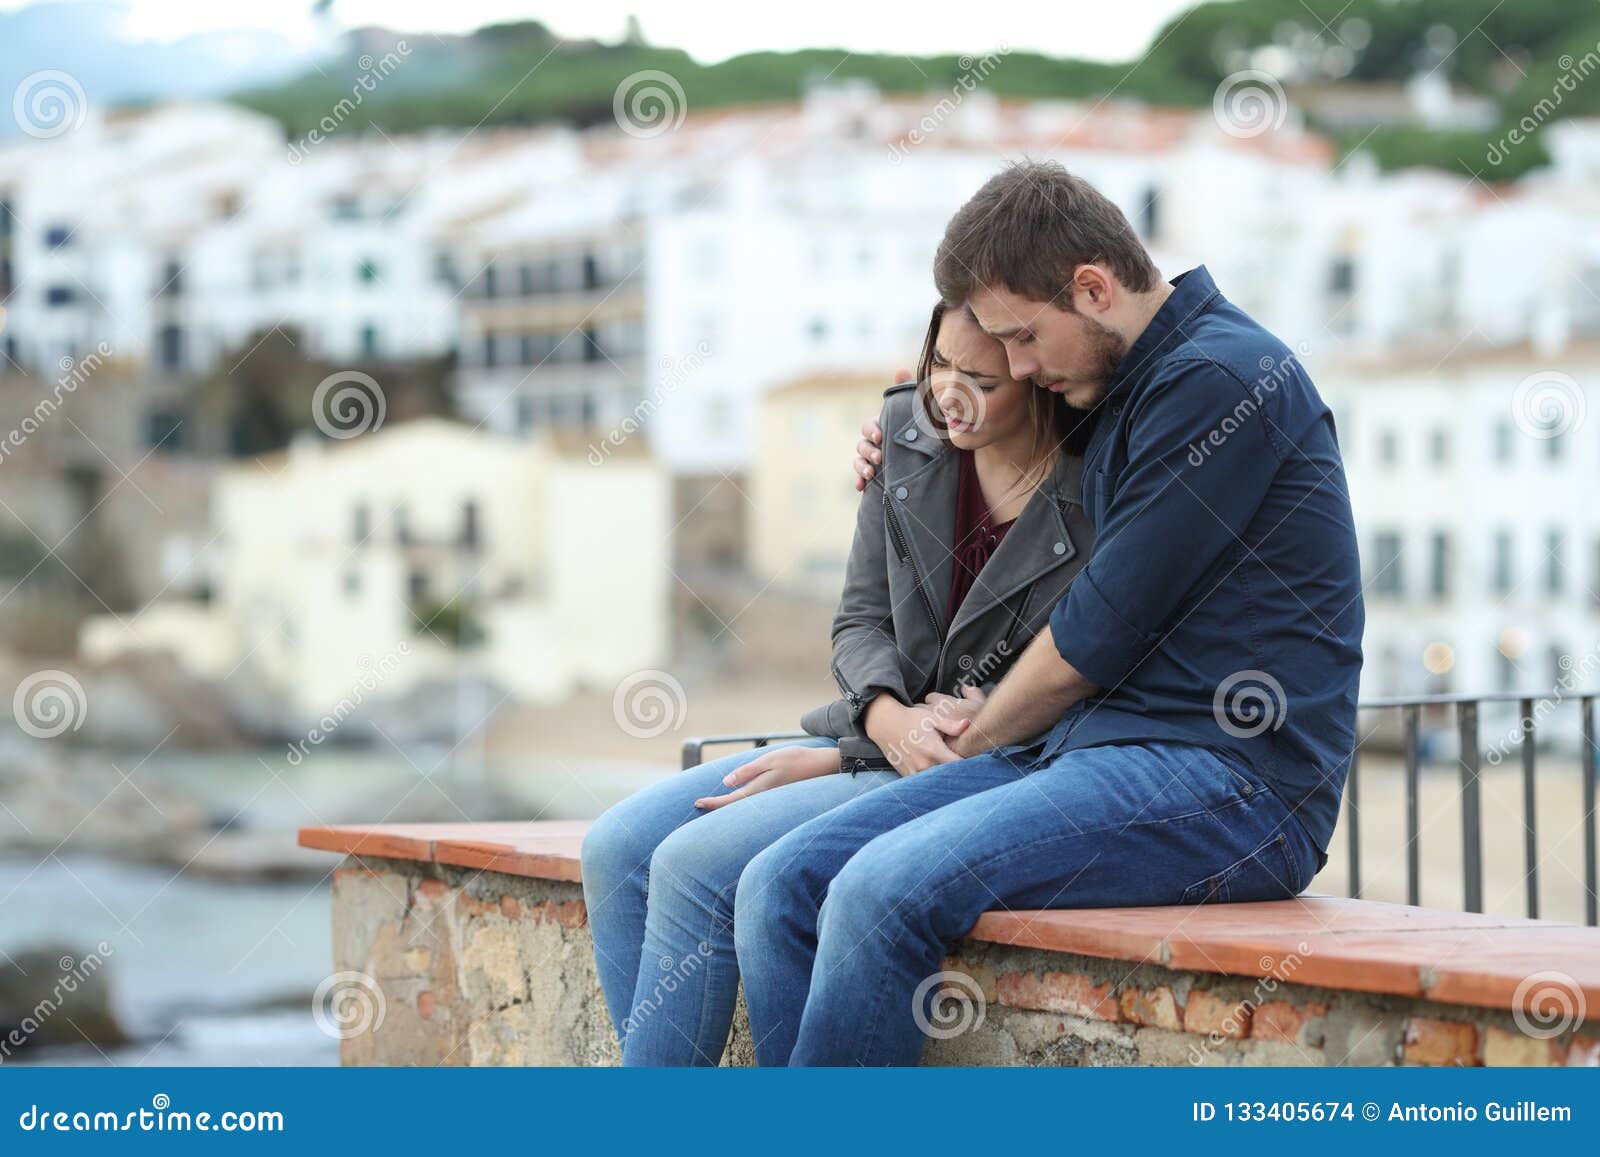 sad woman and man comforting her on a ledge